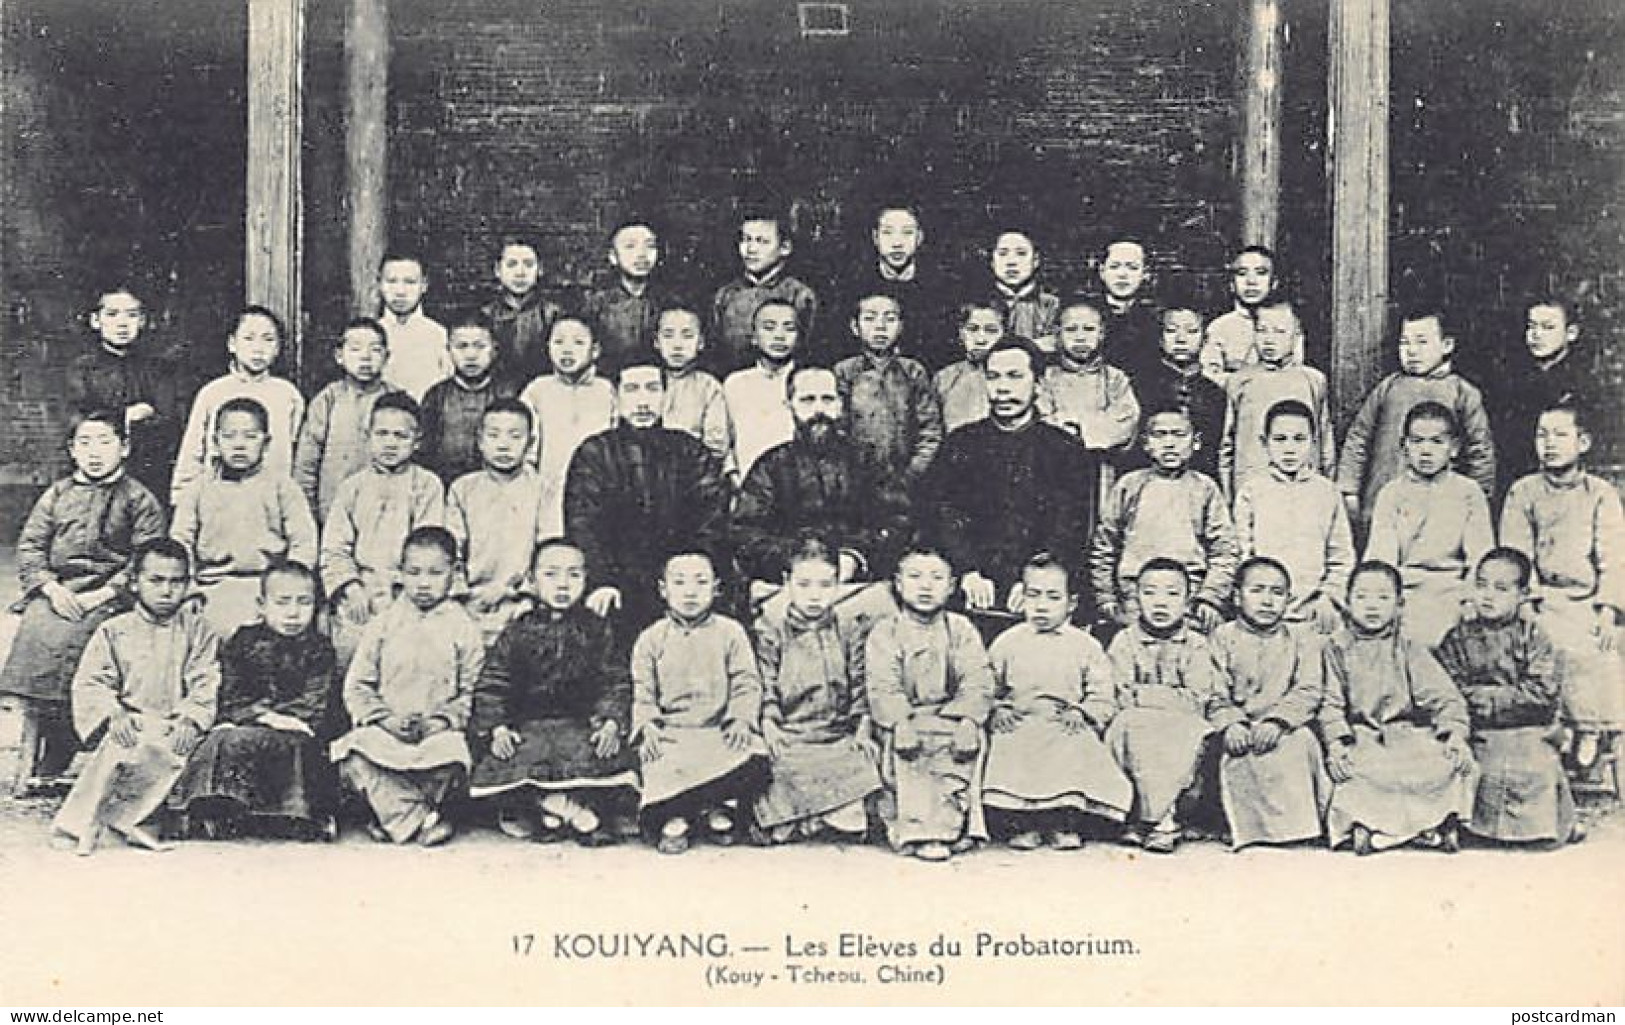 China - GUIYANG Kouiyang - The Students Of The Probatorium - Publ. Mission Of The Franciscan Fathers 17 - China